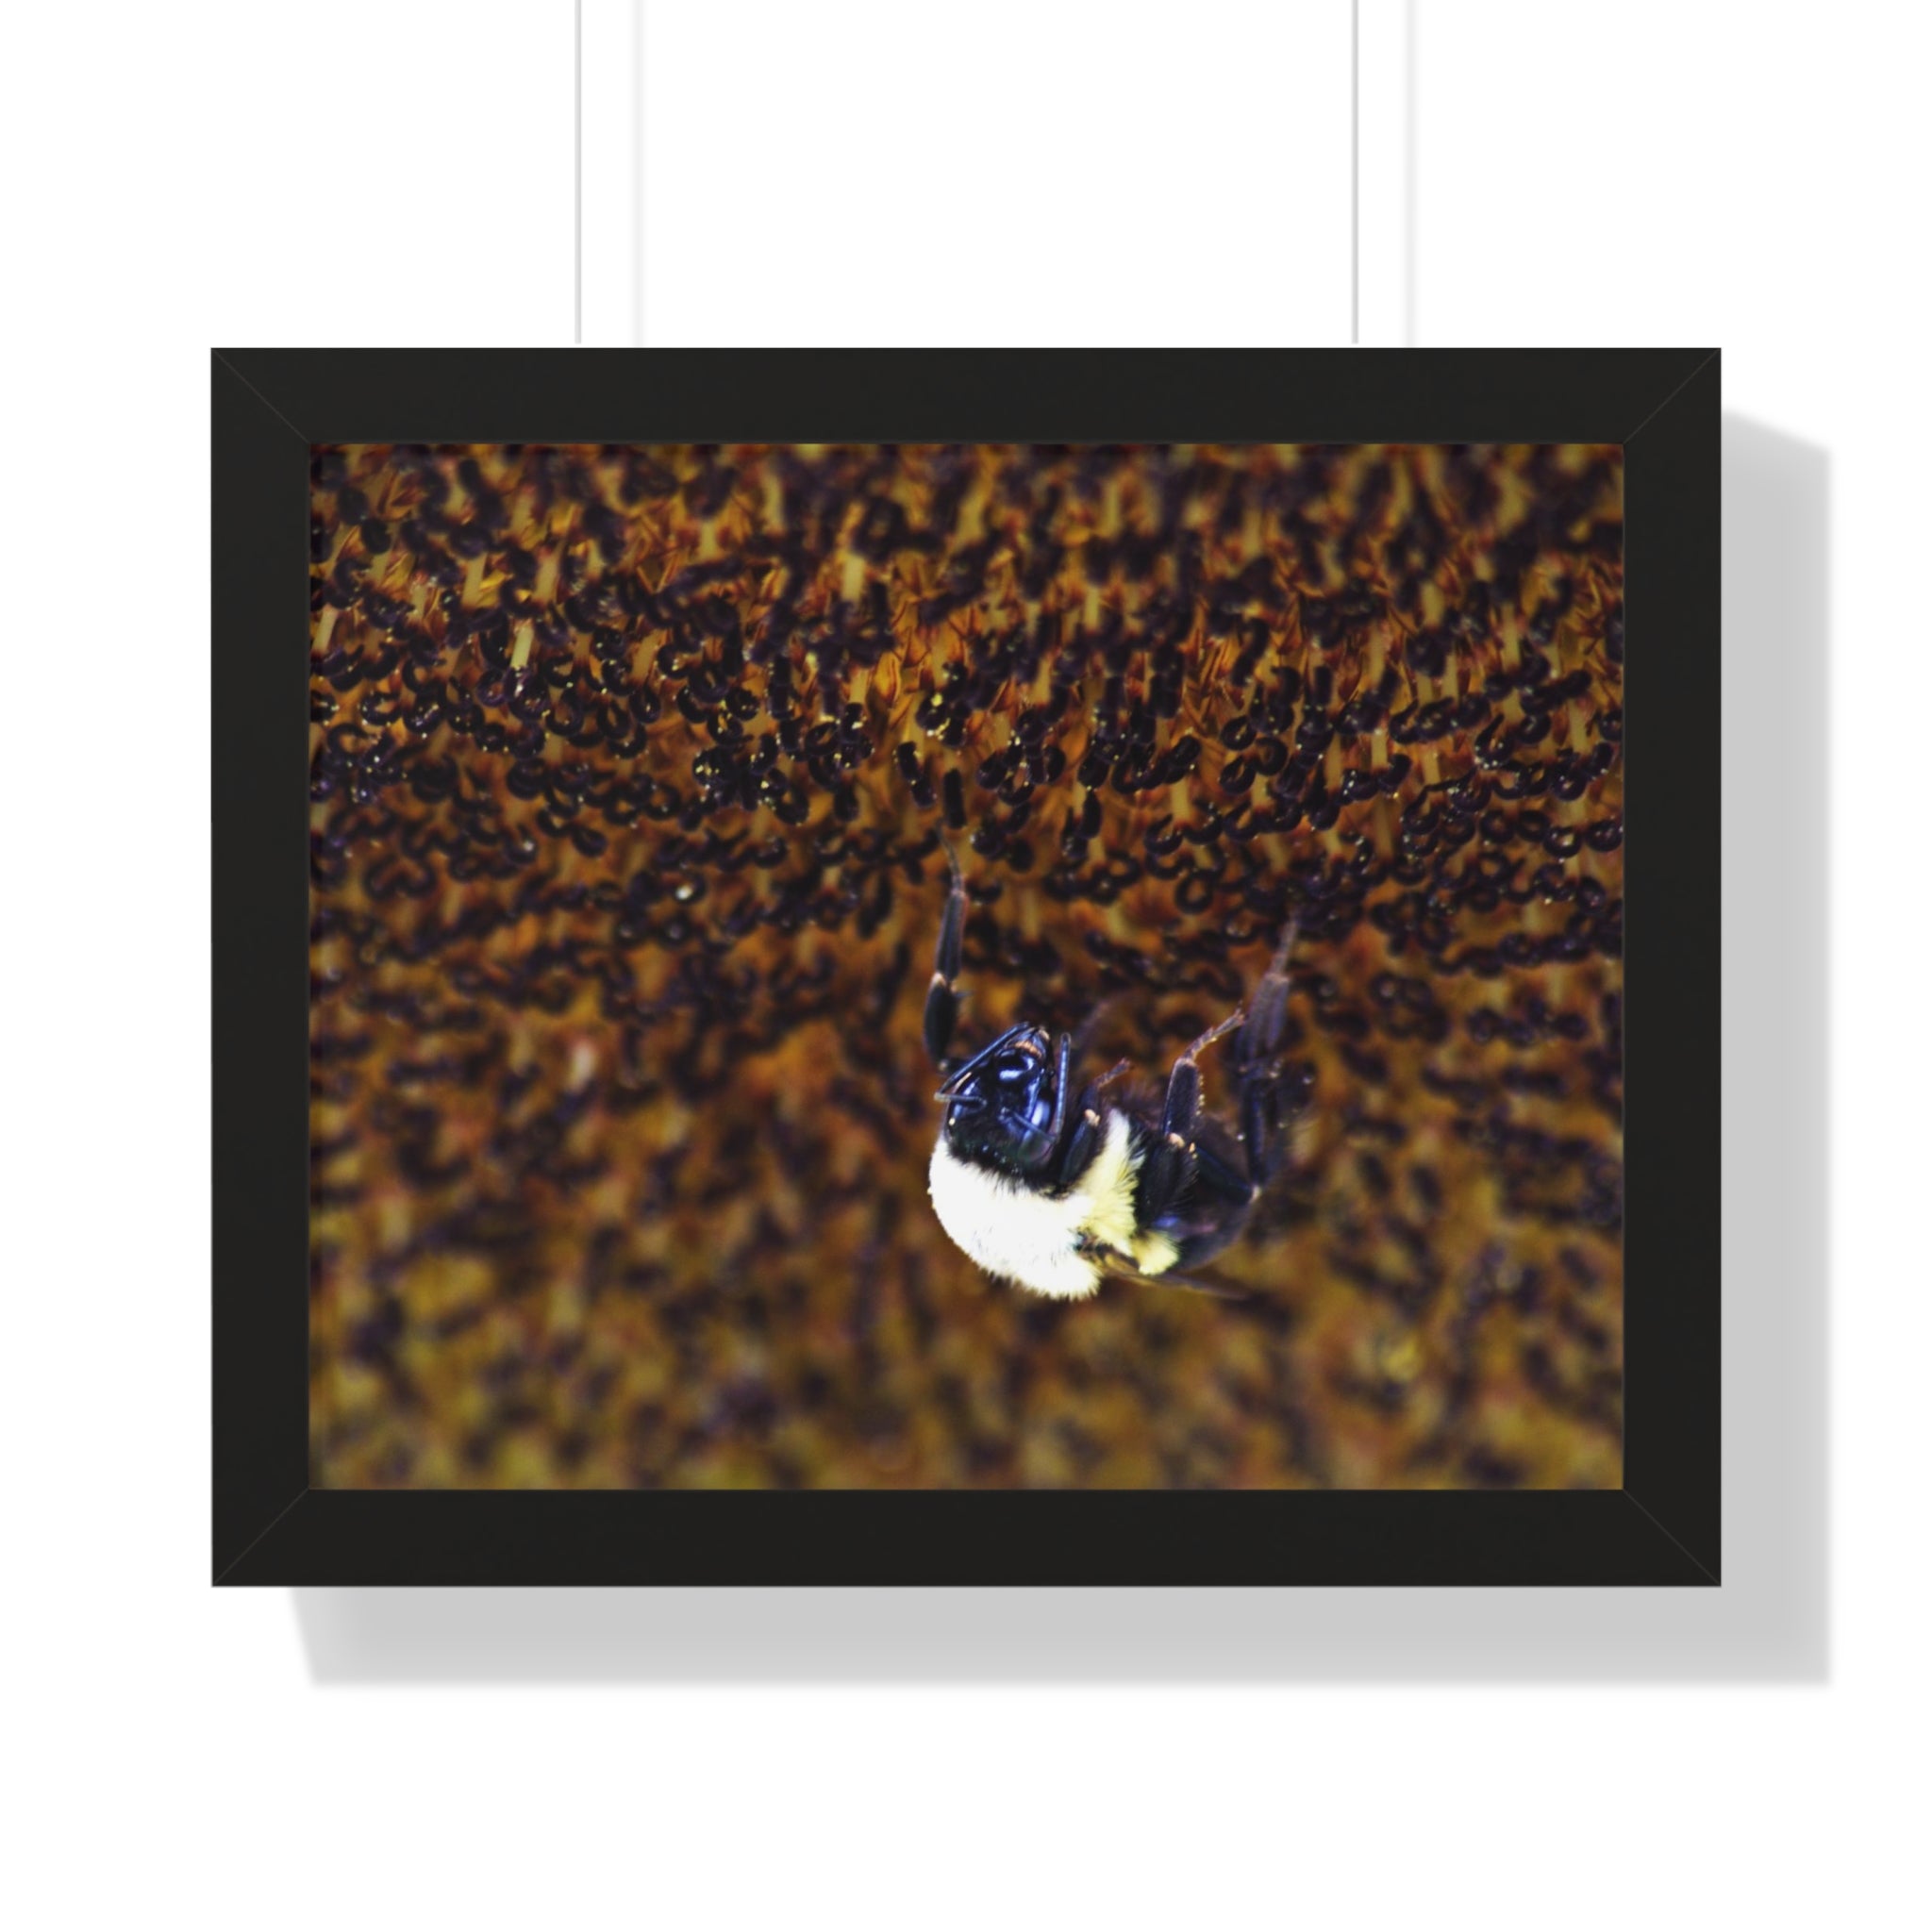 Bumblebee on Sunflower - Framed Horizontal Poster